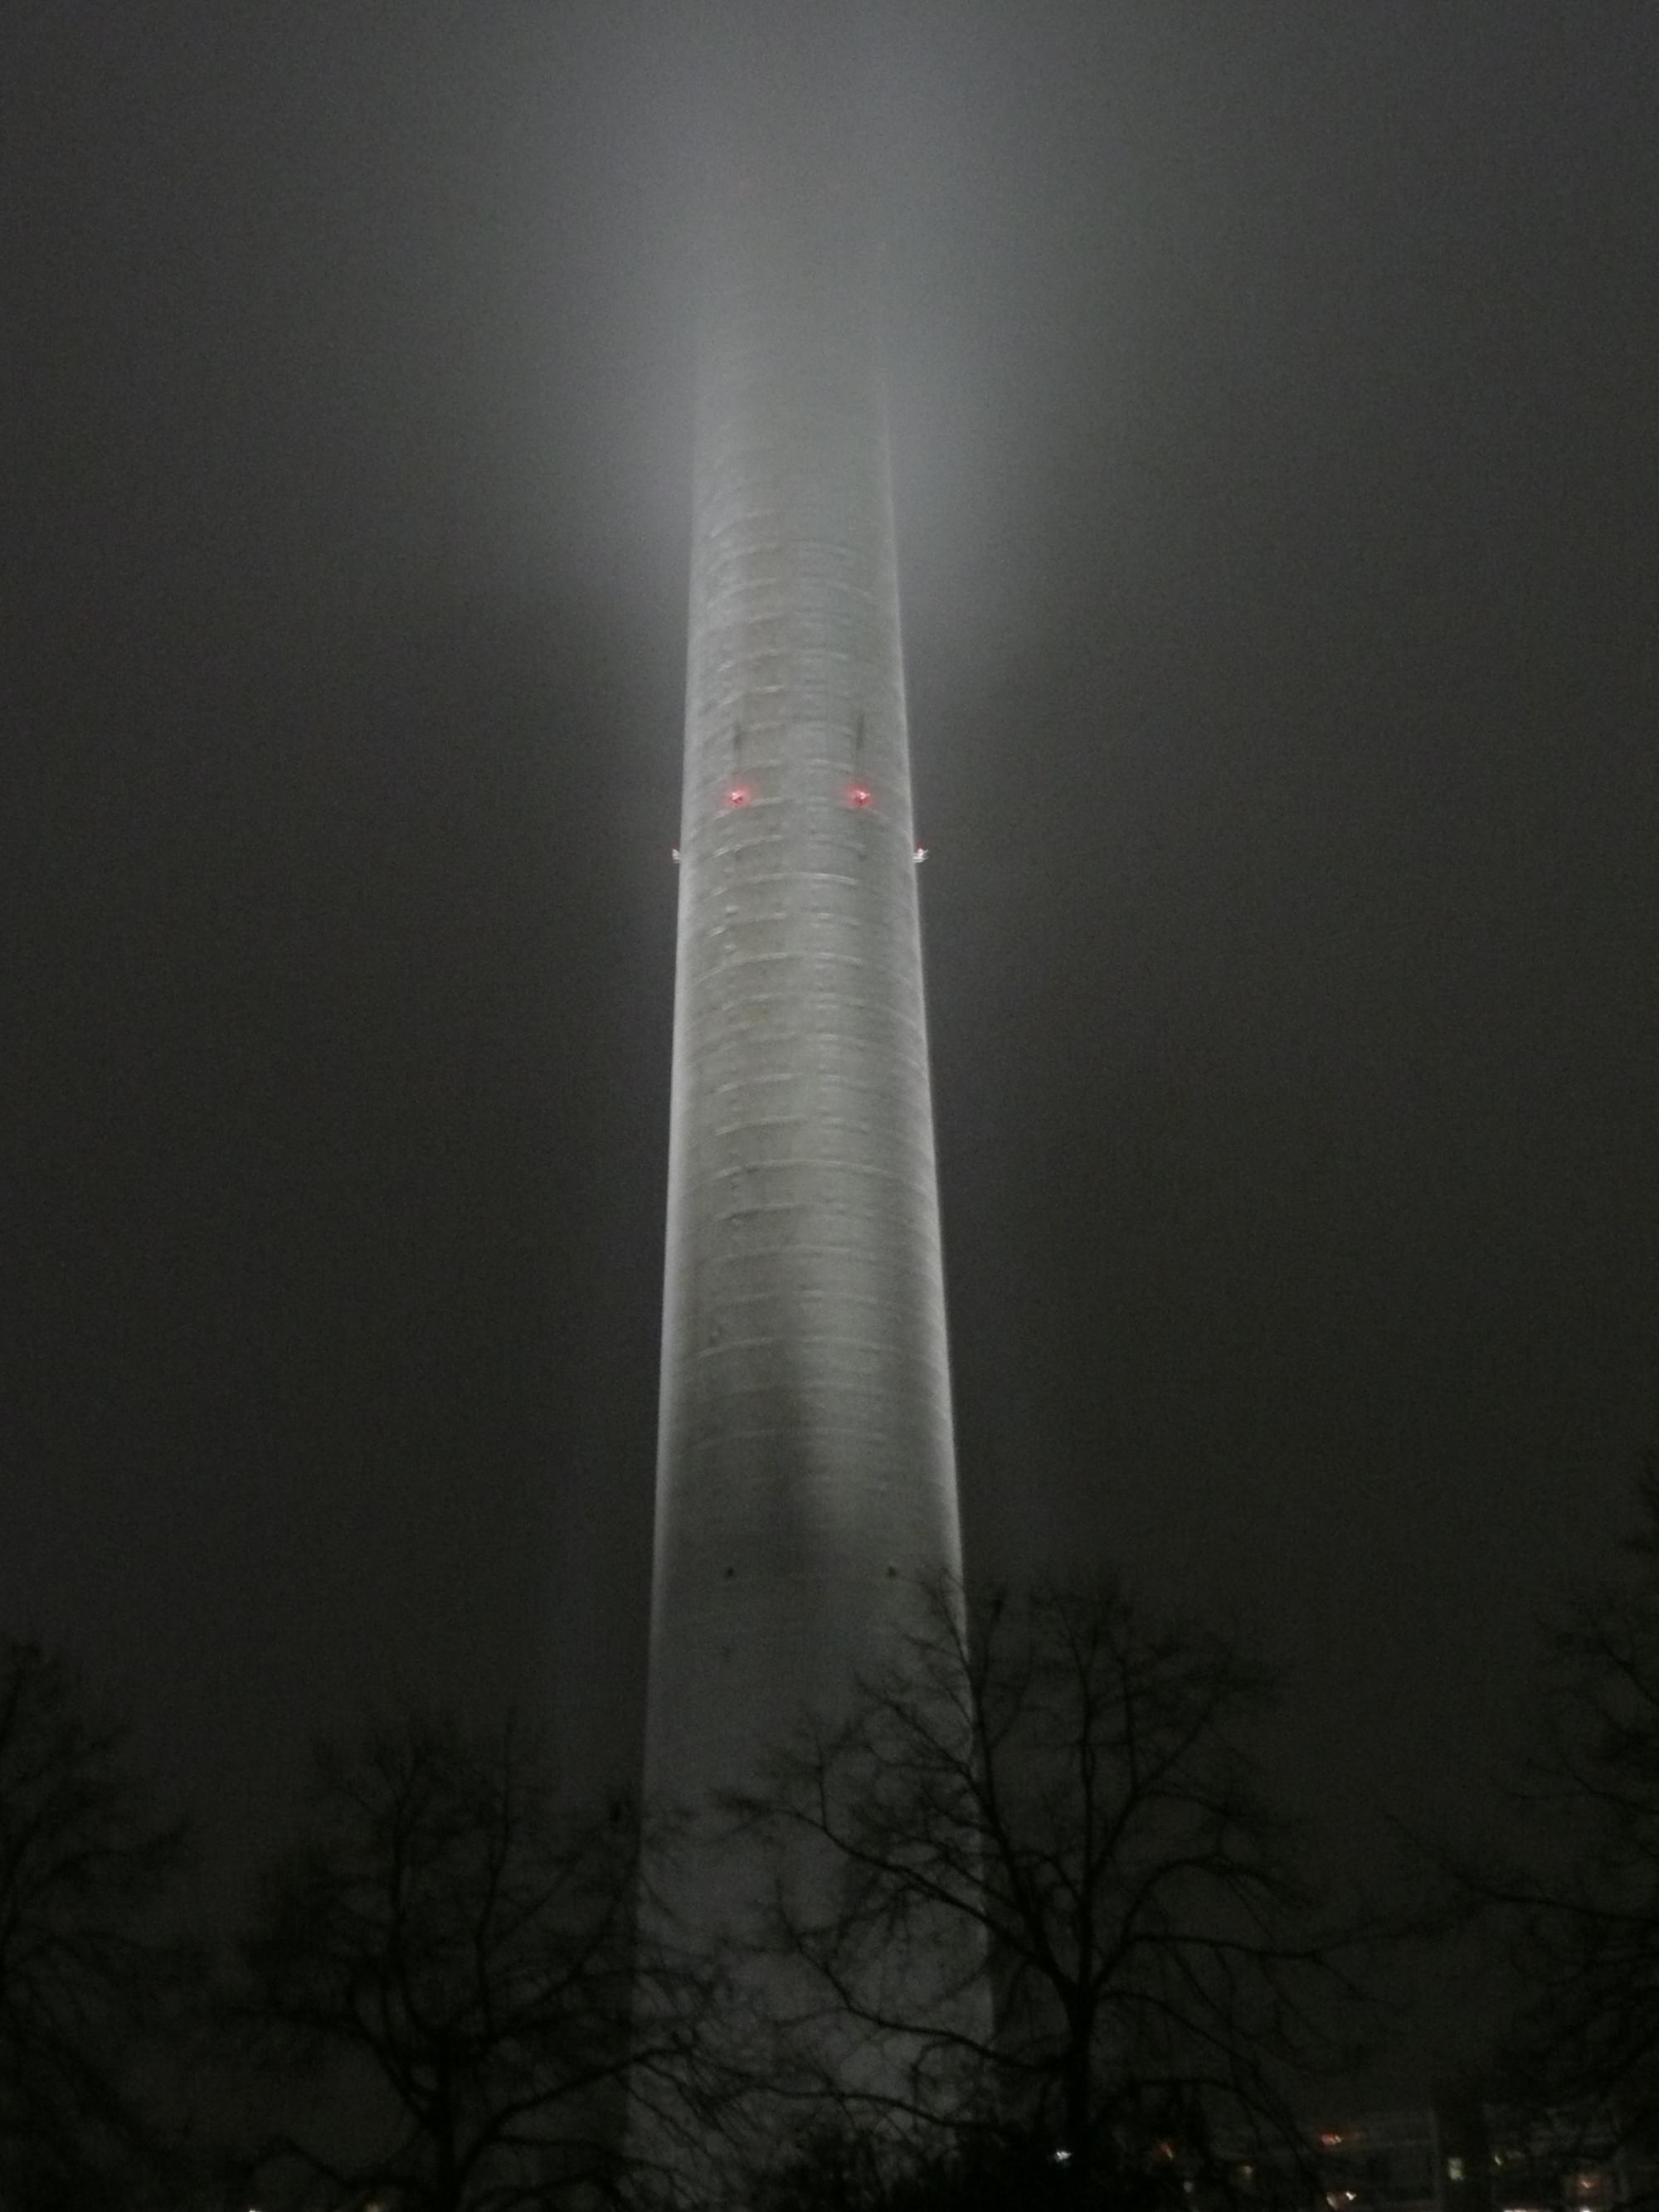 Berlin im Nebel